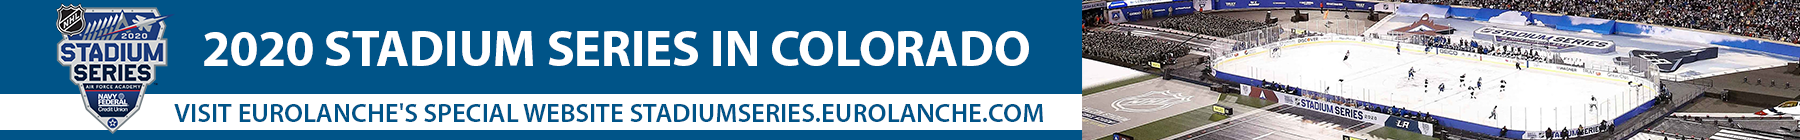 2020 Stadium Series in Colorado - by Eurolanche - banner